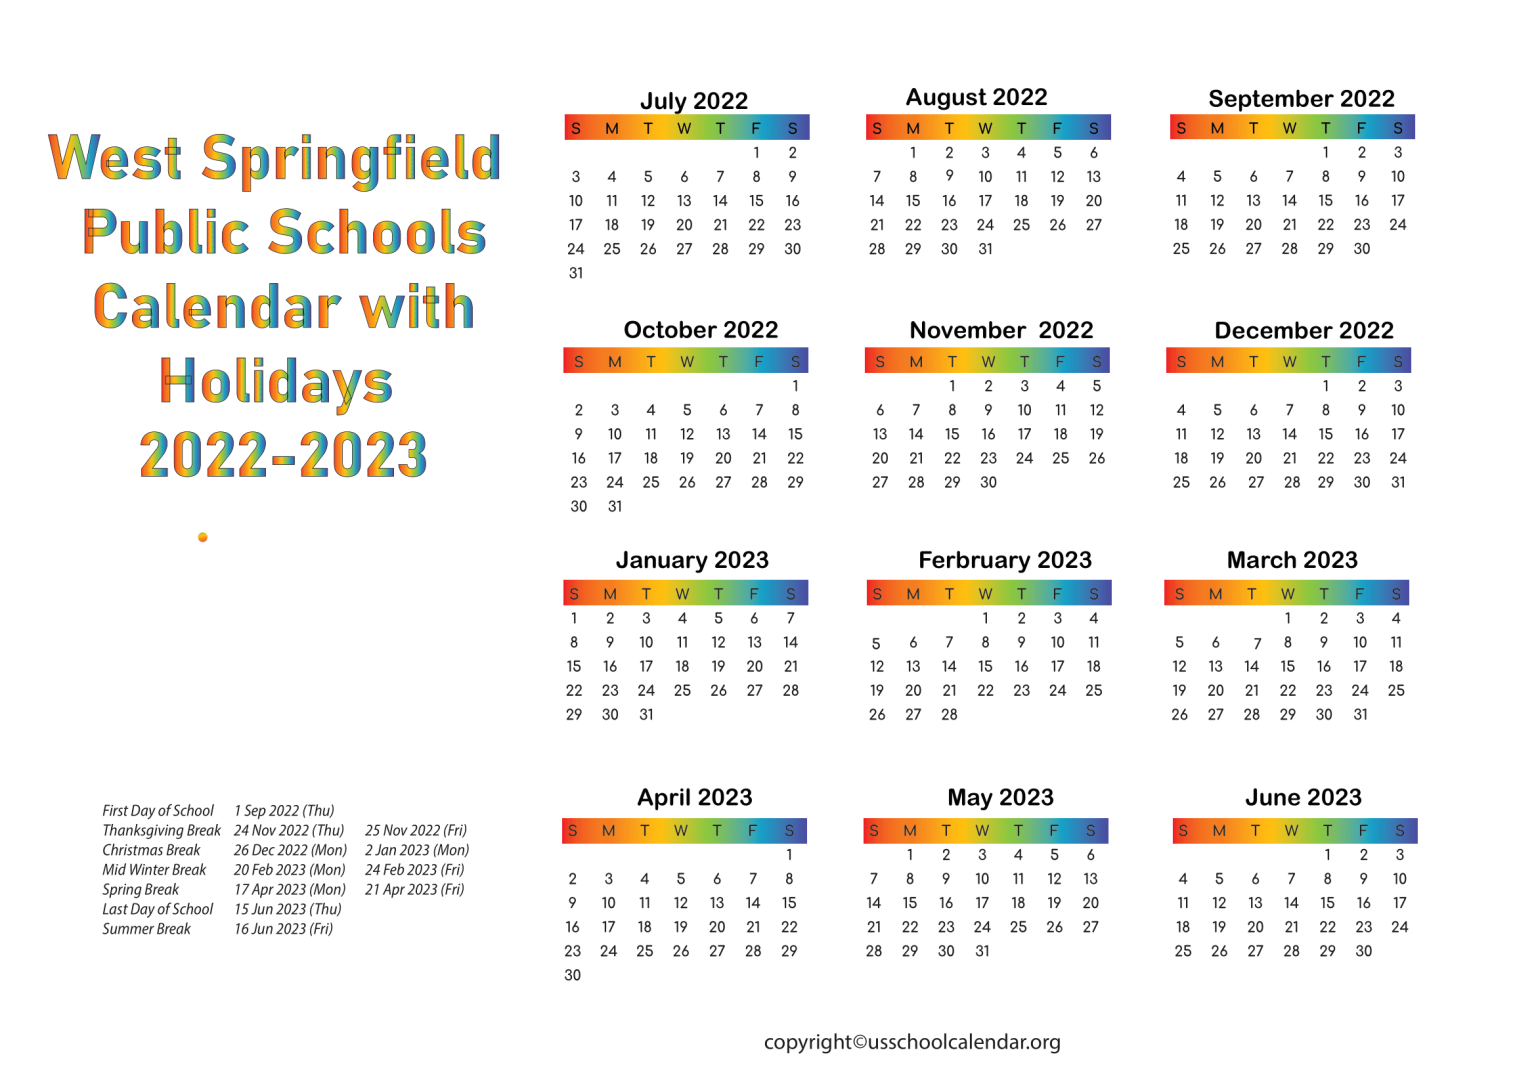 WSPS West Springfield Public Schools Calendar for 2022 2023